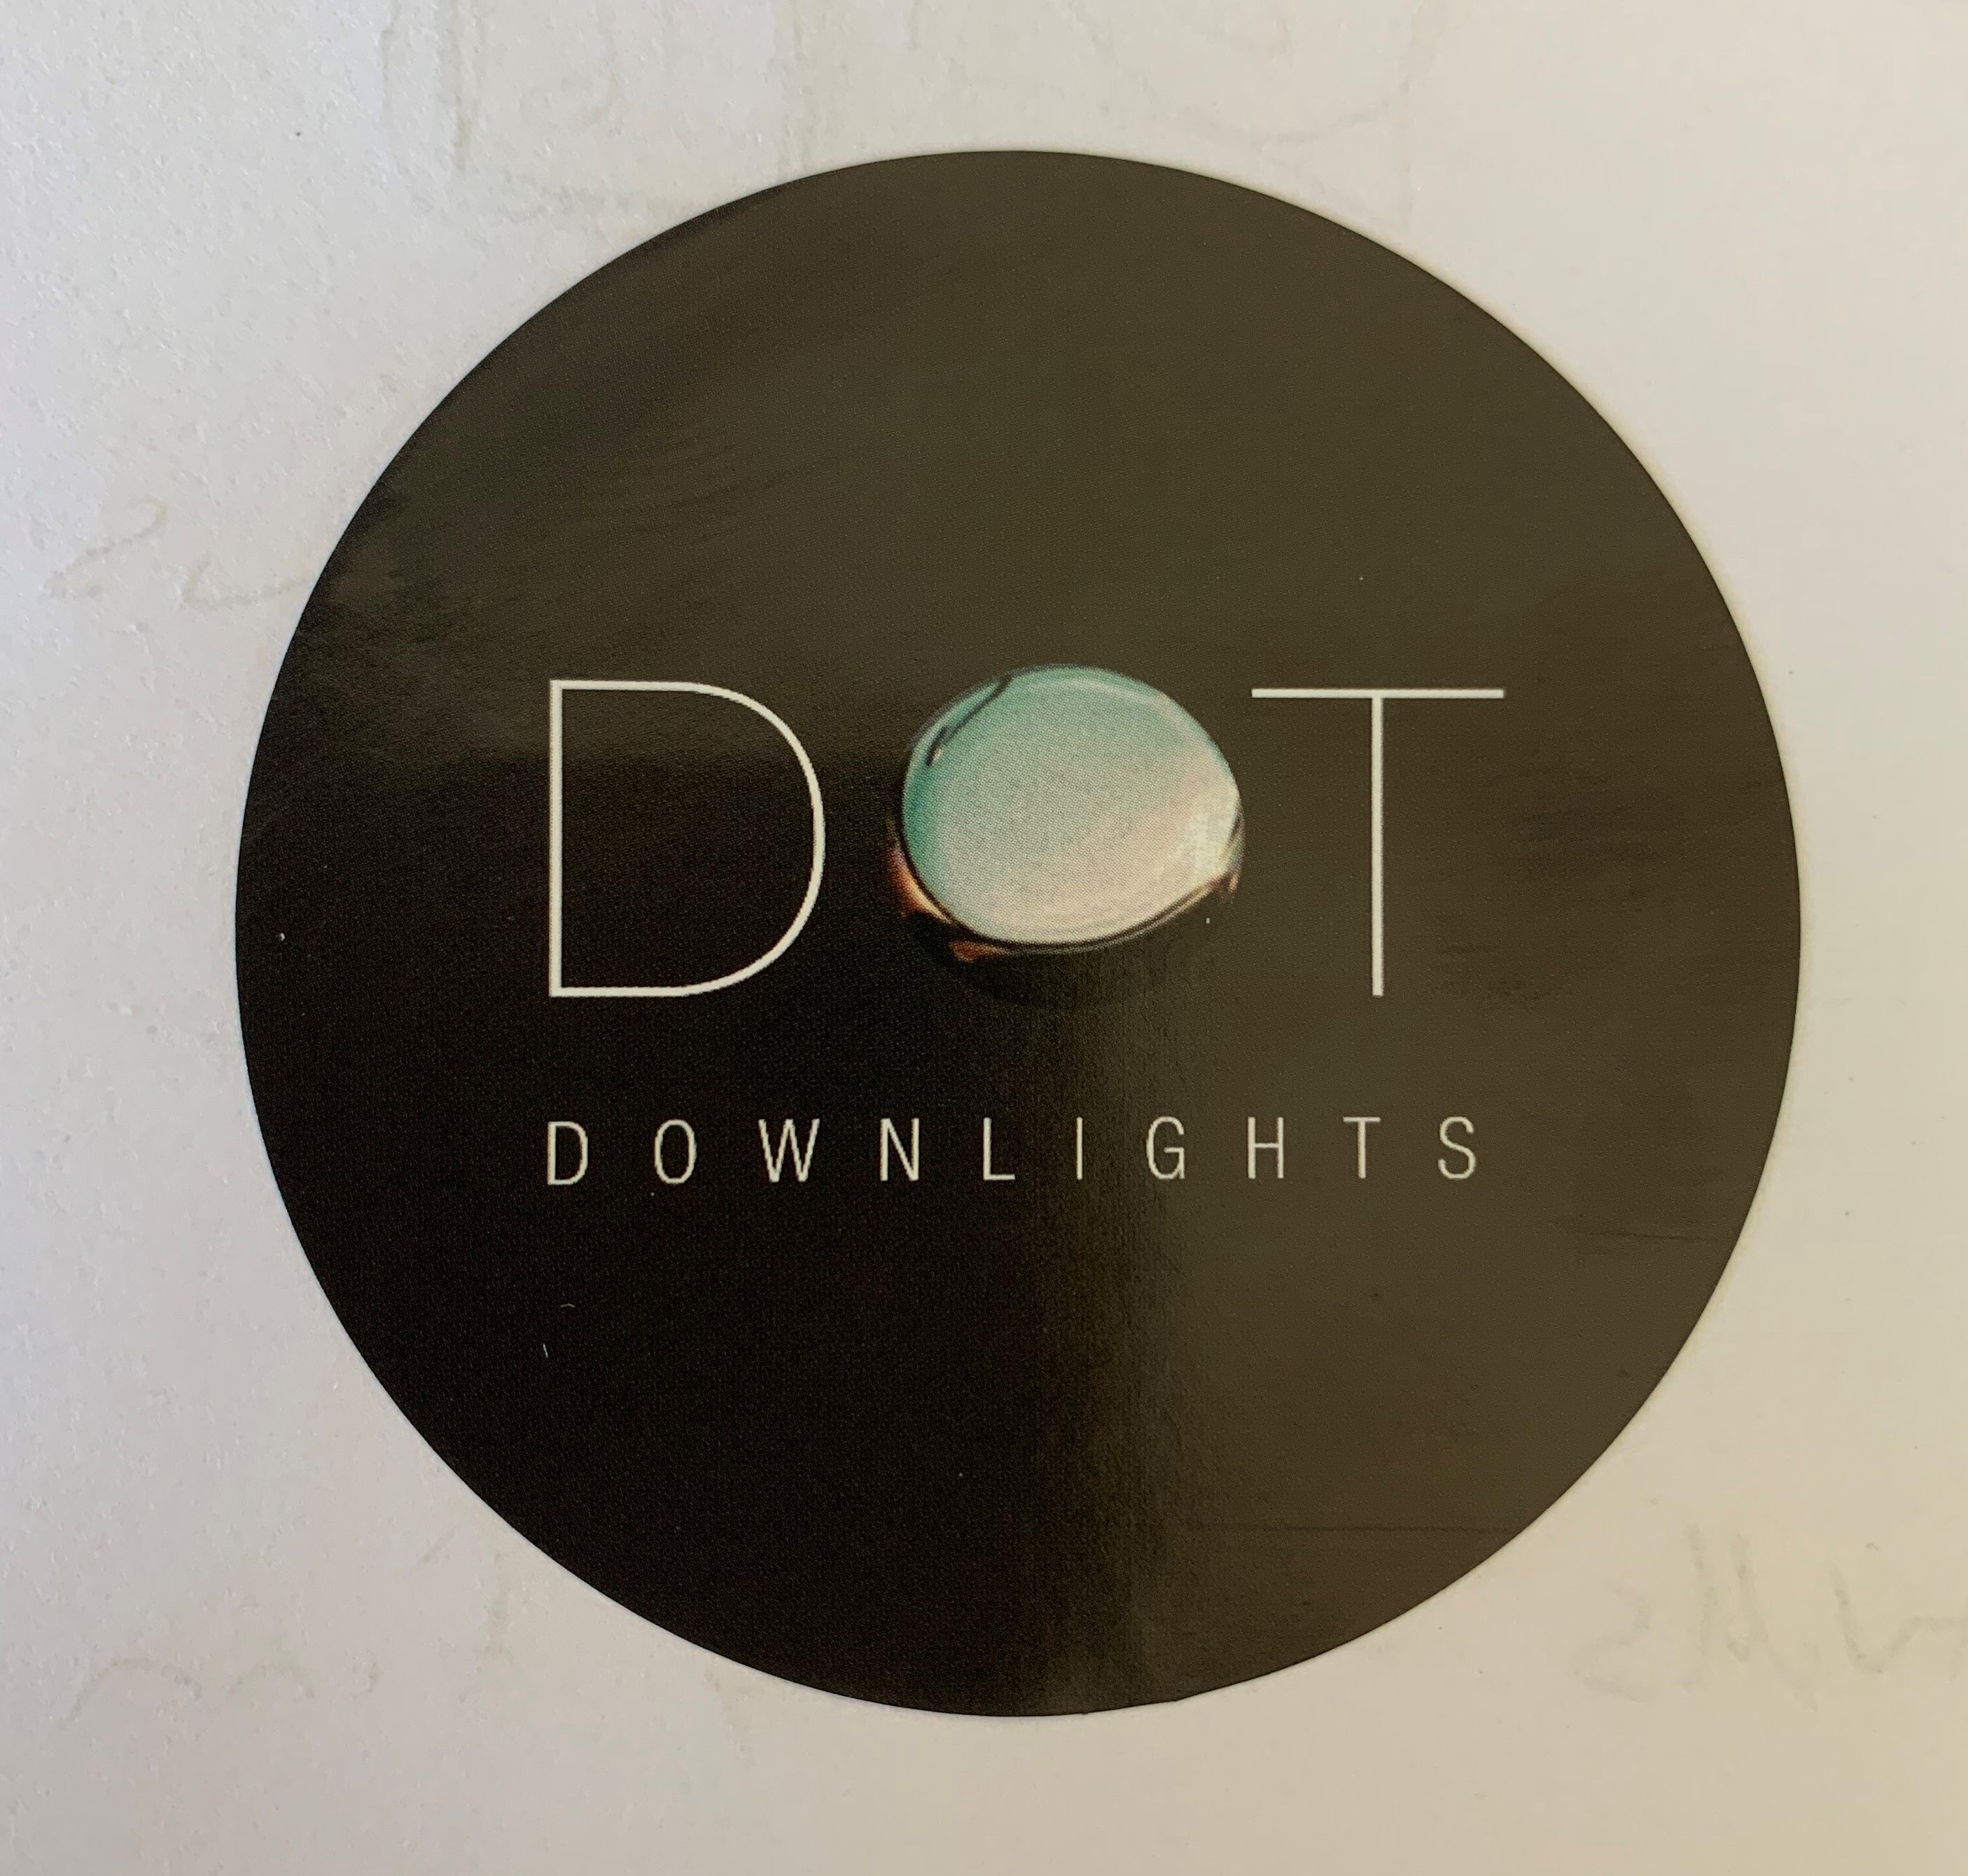 Dot Downlights